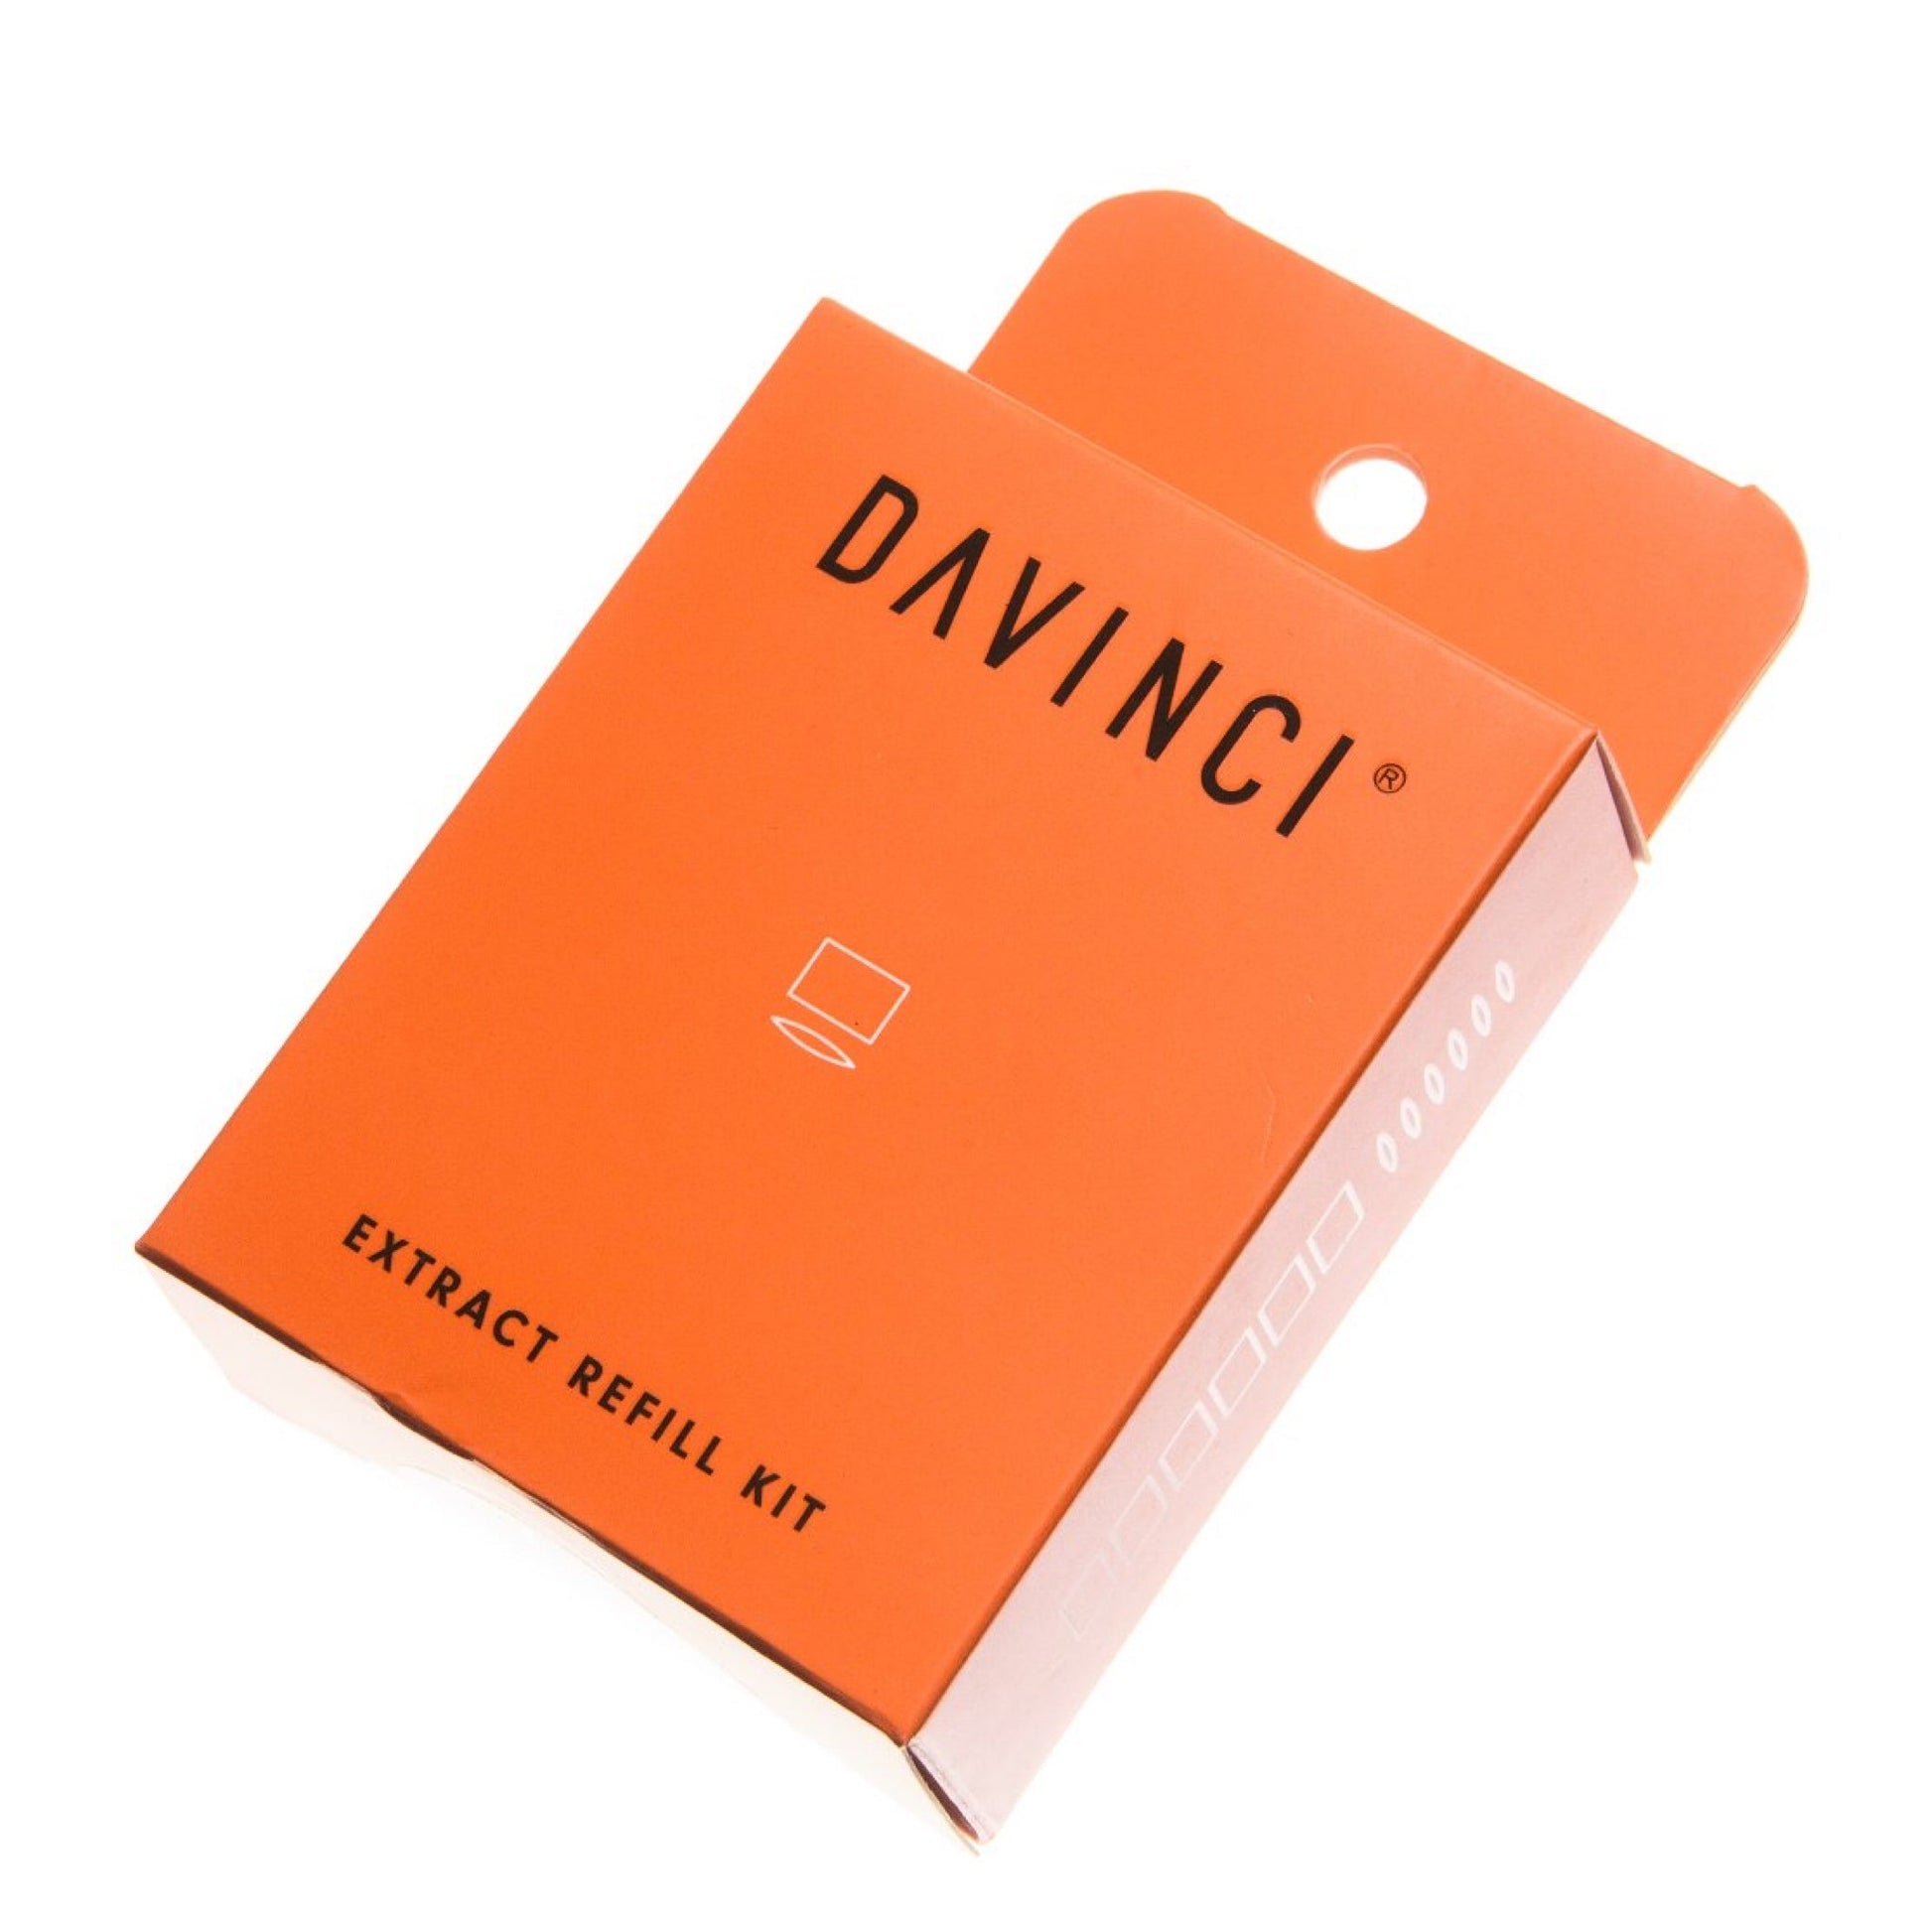 DaVinci Extract Refill Kit by DaVinci Vaporizers | Mission Dispensary